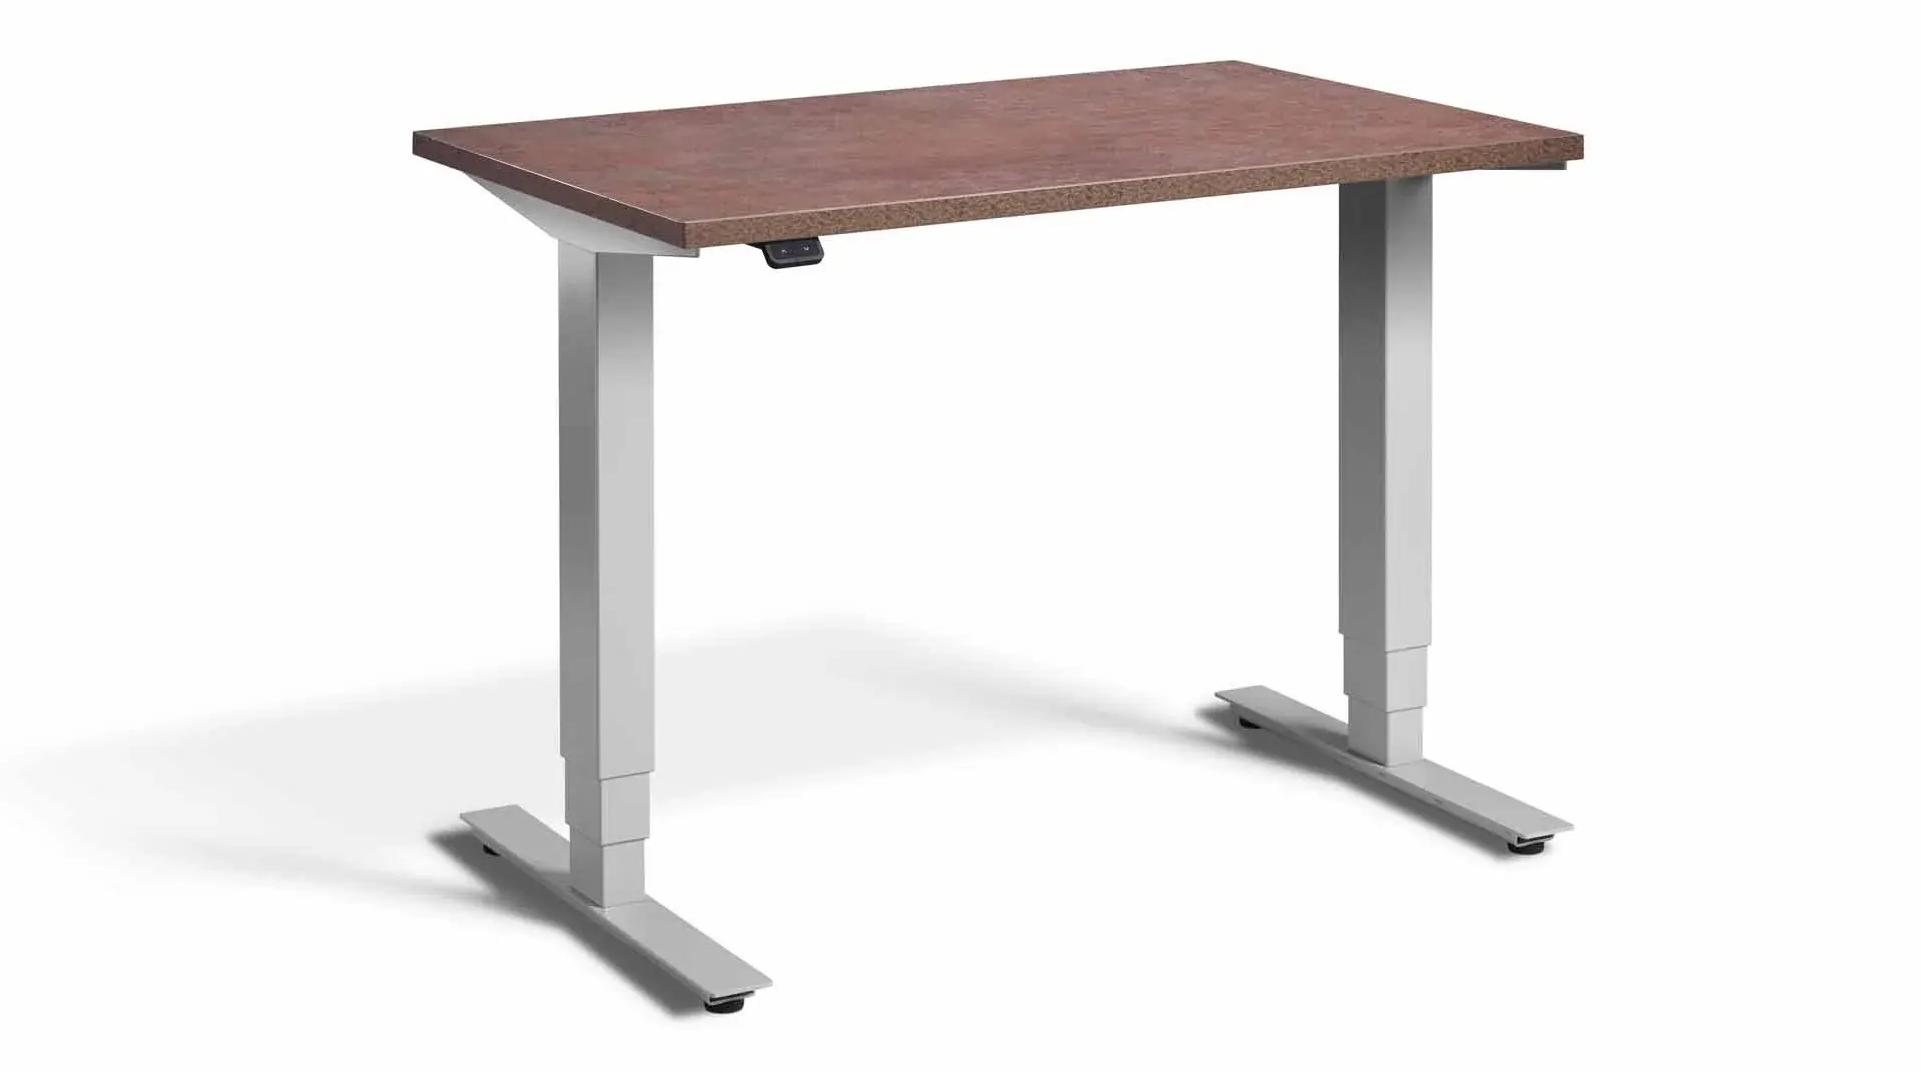 Atlas Mini - Best compact standing desk in the world